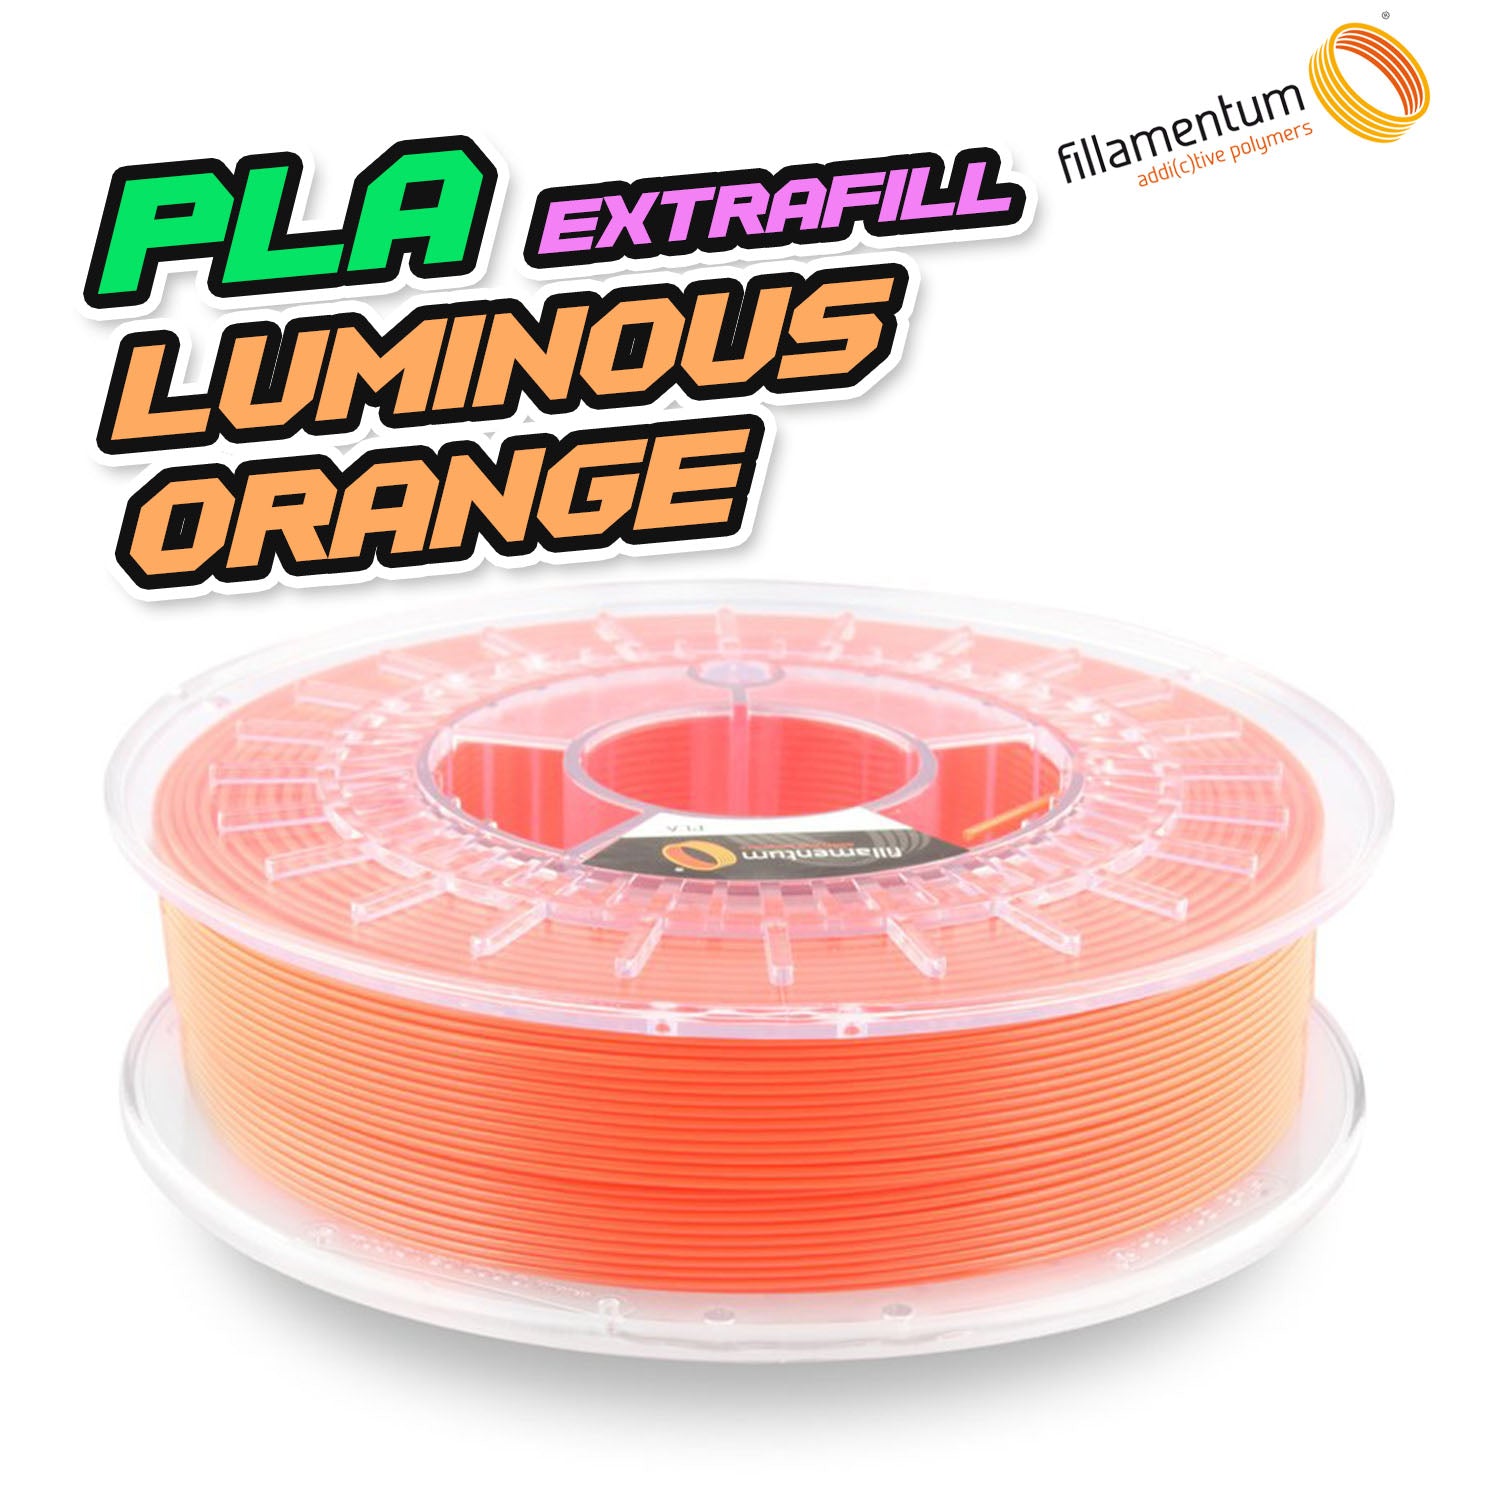 Fillamentum PLA Extrafill - Luminous Orange [1.75mm] (28,80€/Kg)